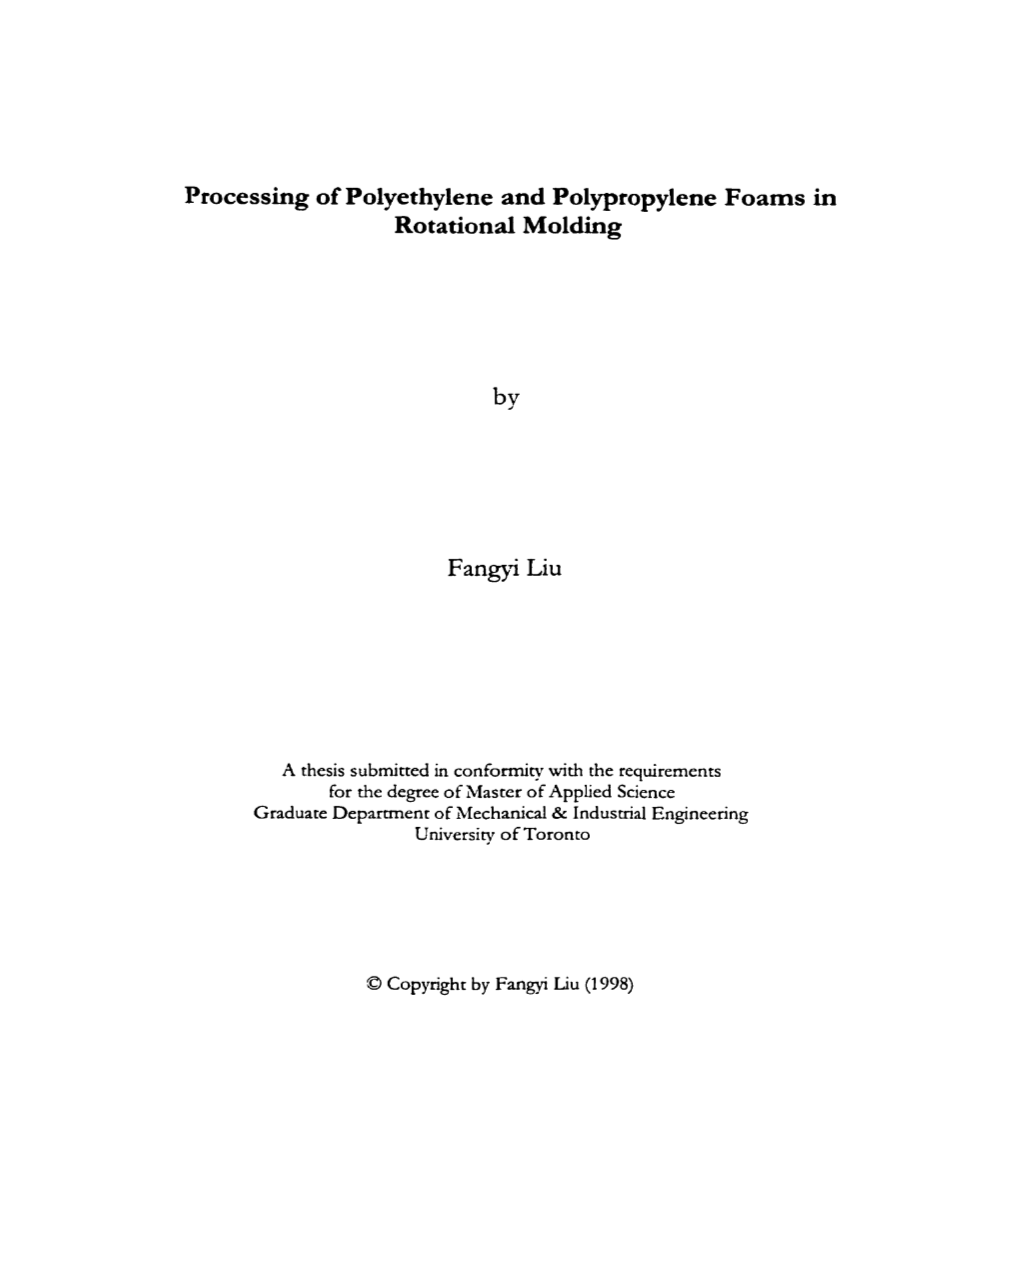 Processing of Polyethylene and Polypropylene Foams in Fangyi